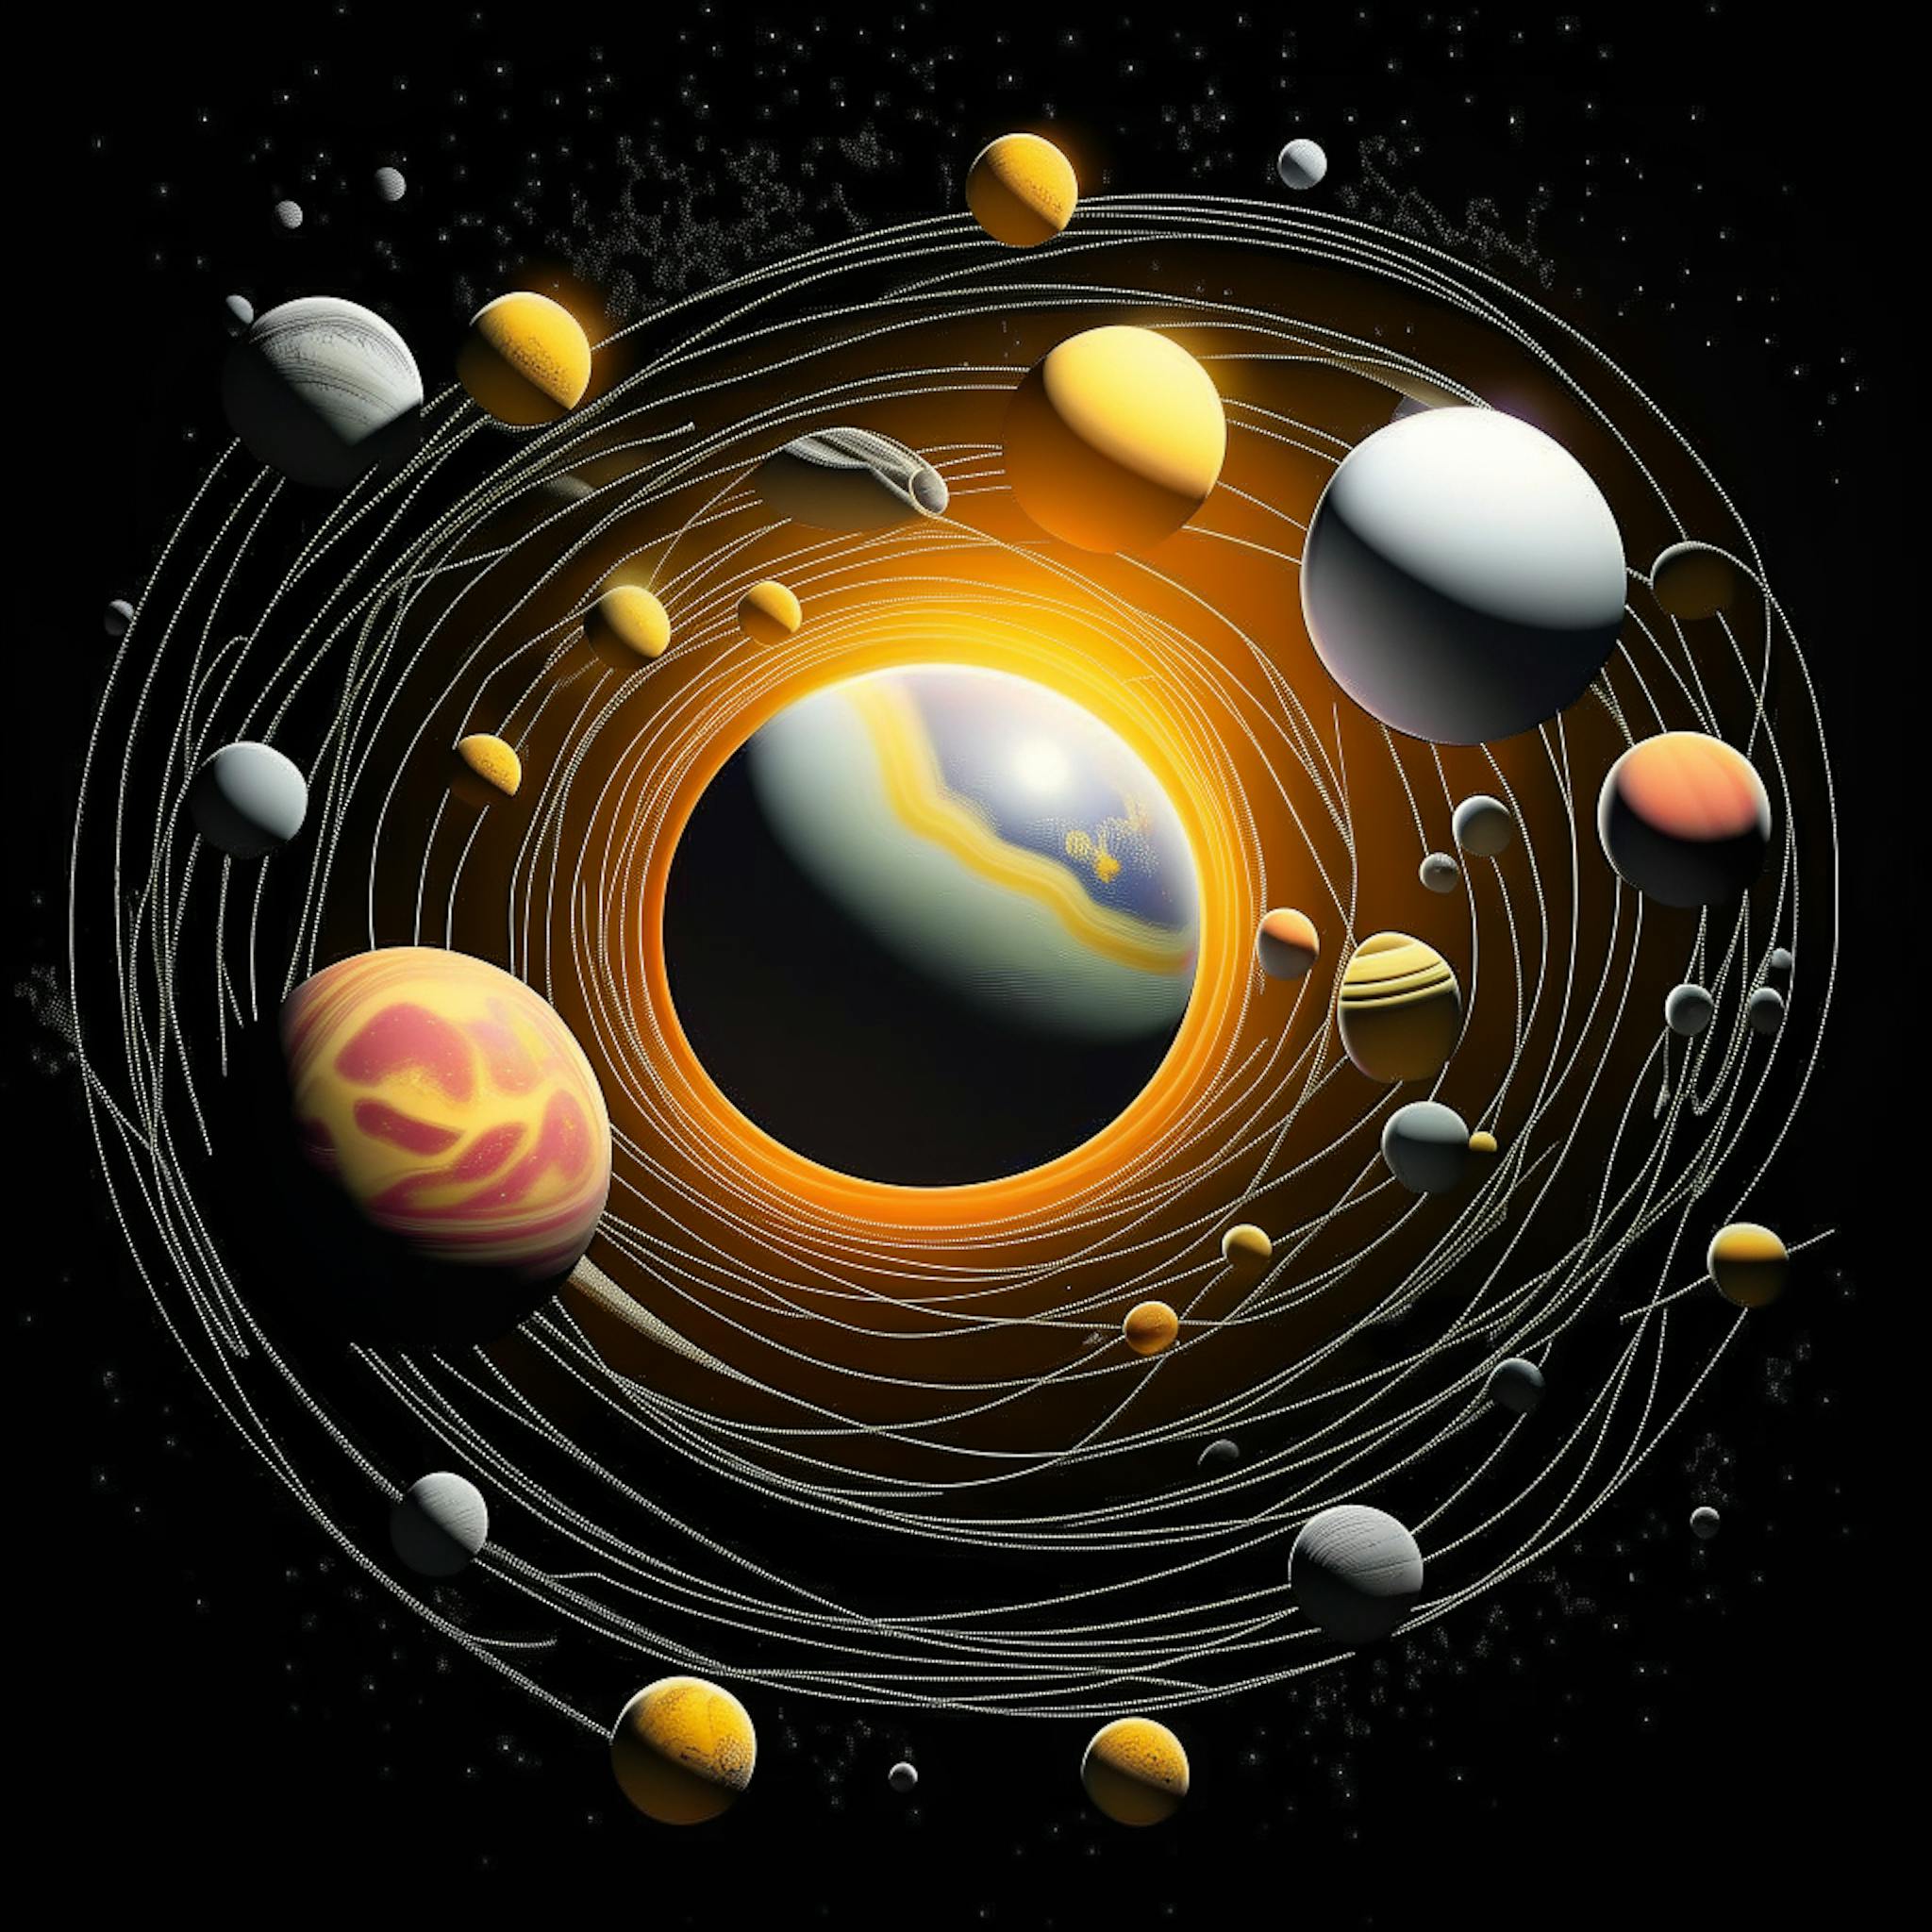 featured image - 通过行星焦散通道观察两颗微透镜行星